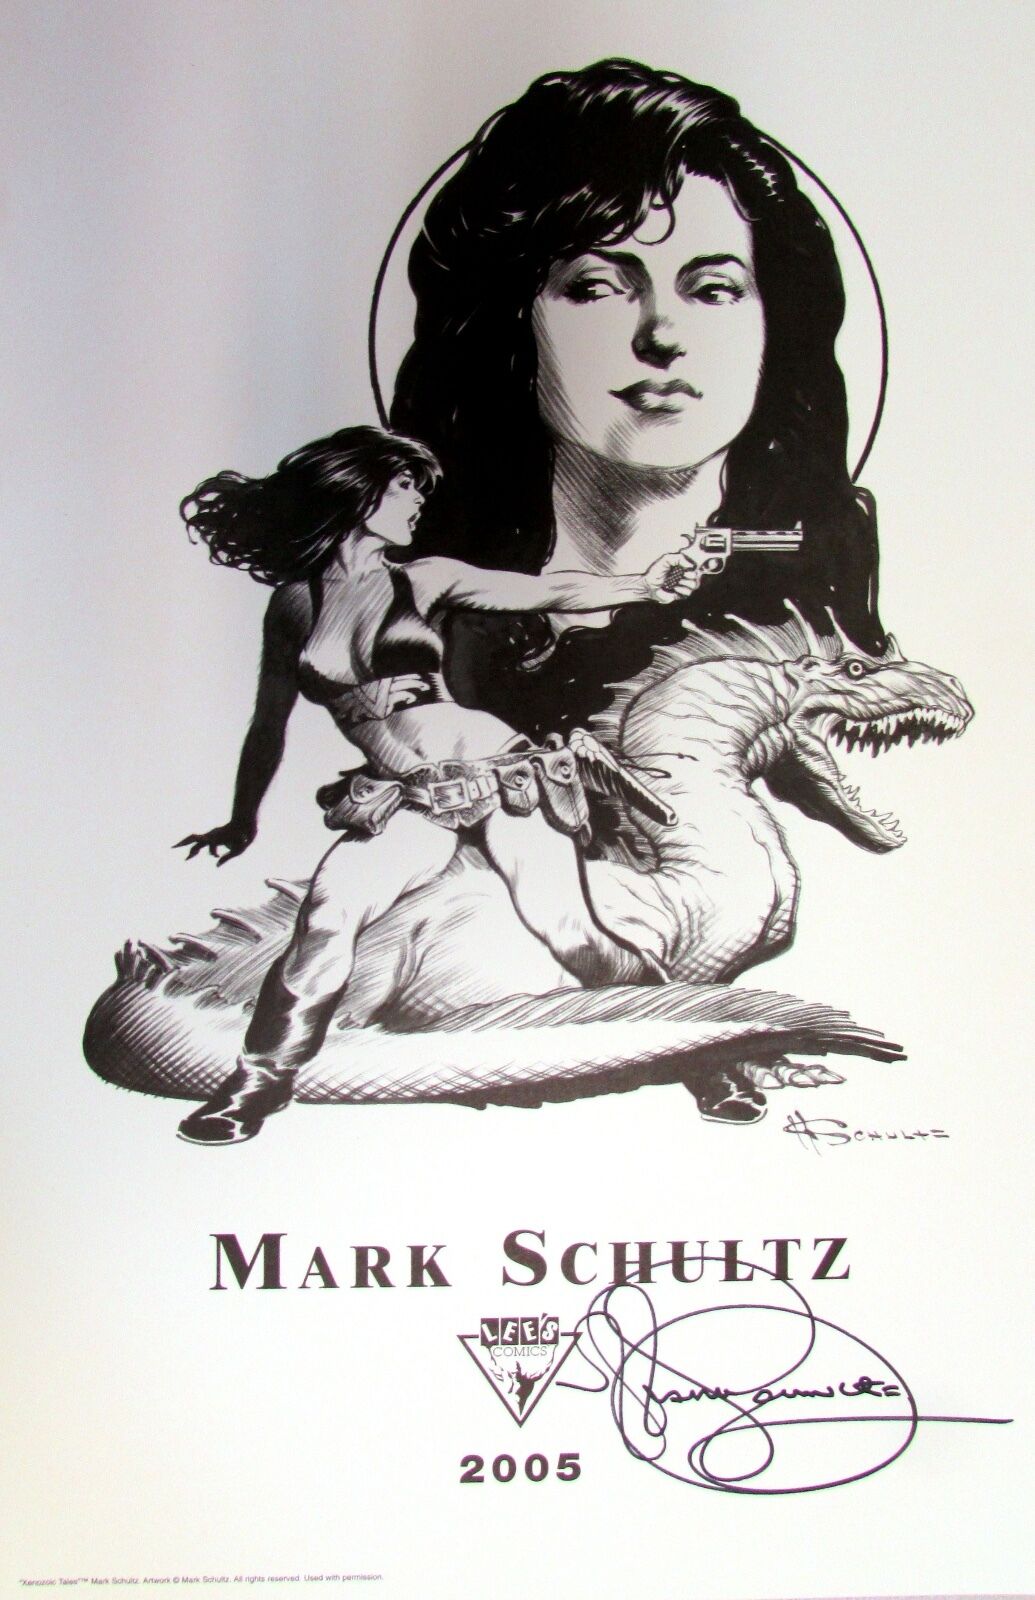 Lee's Comics MARK SCHULTZ fine art print Xenozoic Tales, 2005 SIGNED EDITION